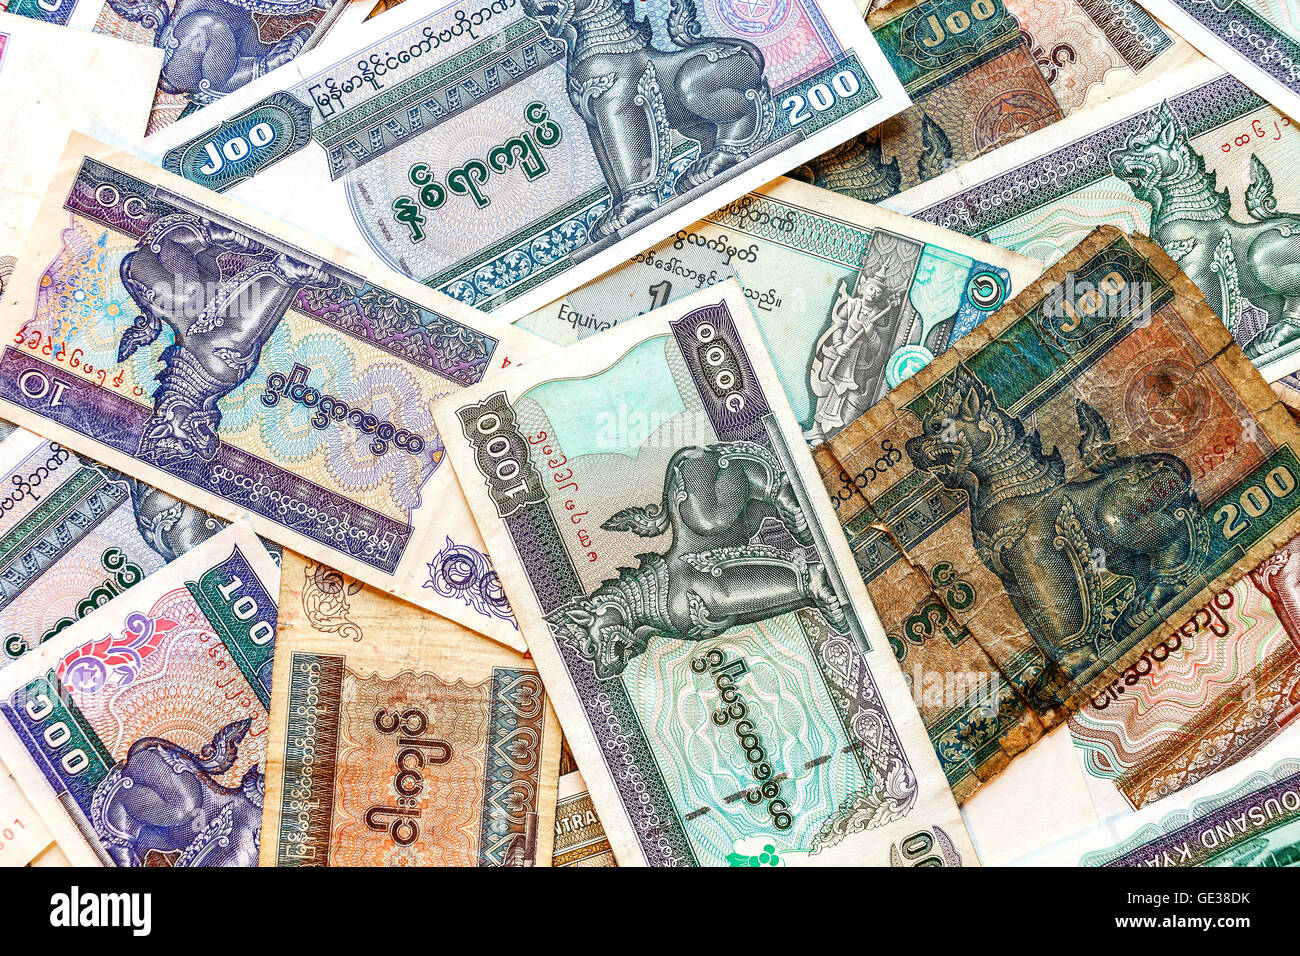 Myanmar (Burma) money, old and new kyat banknotes. Stock Photo